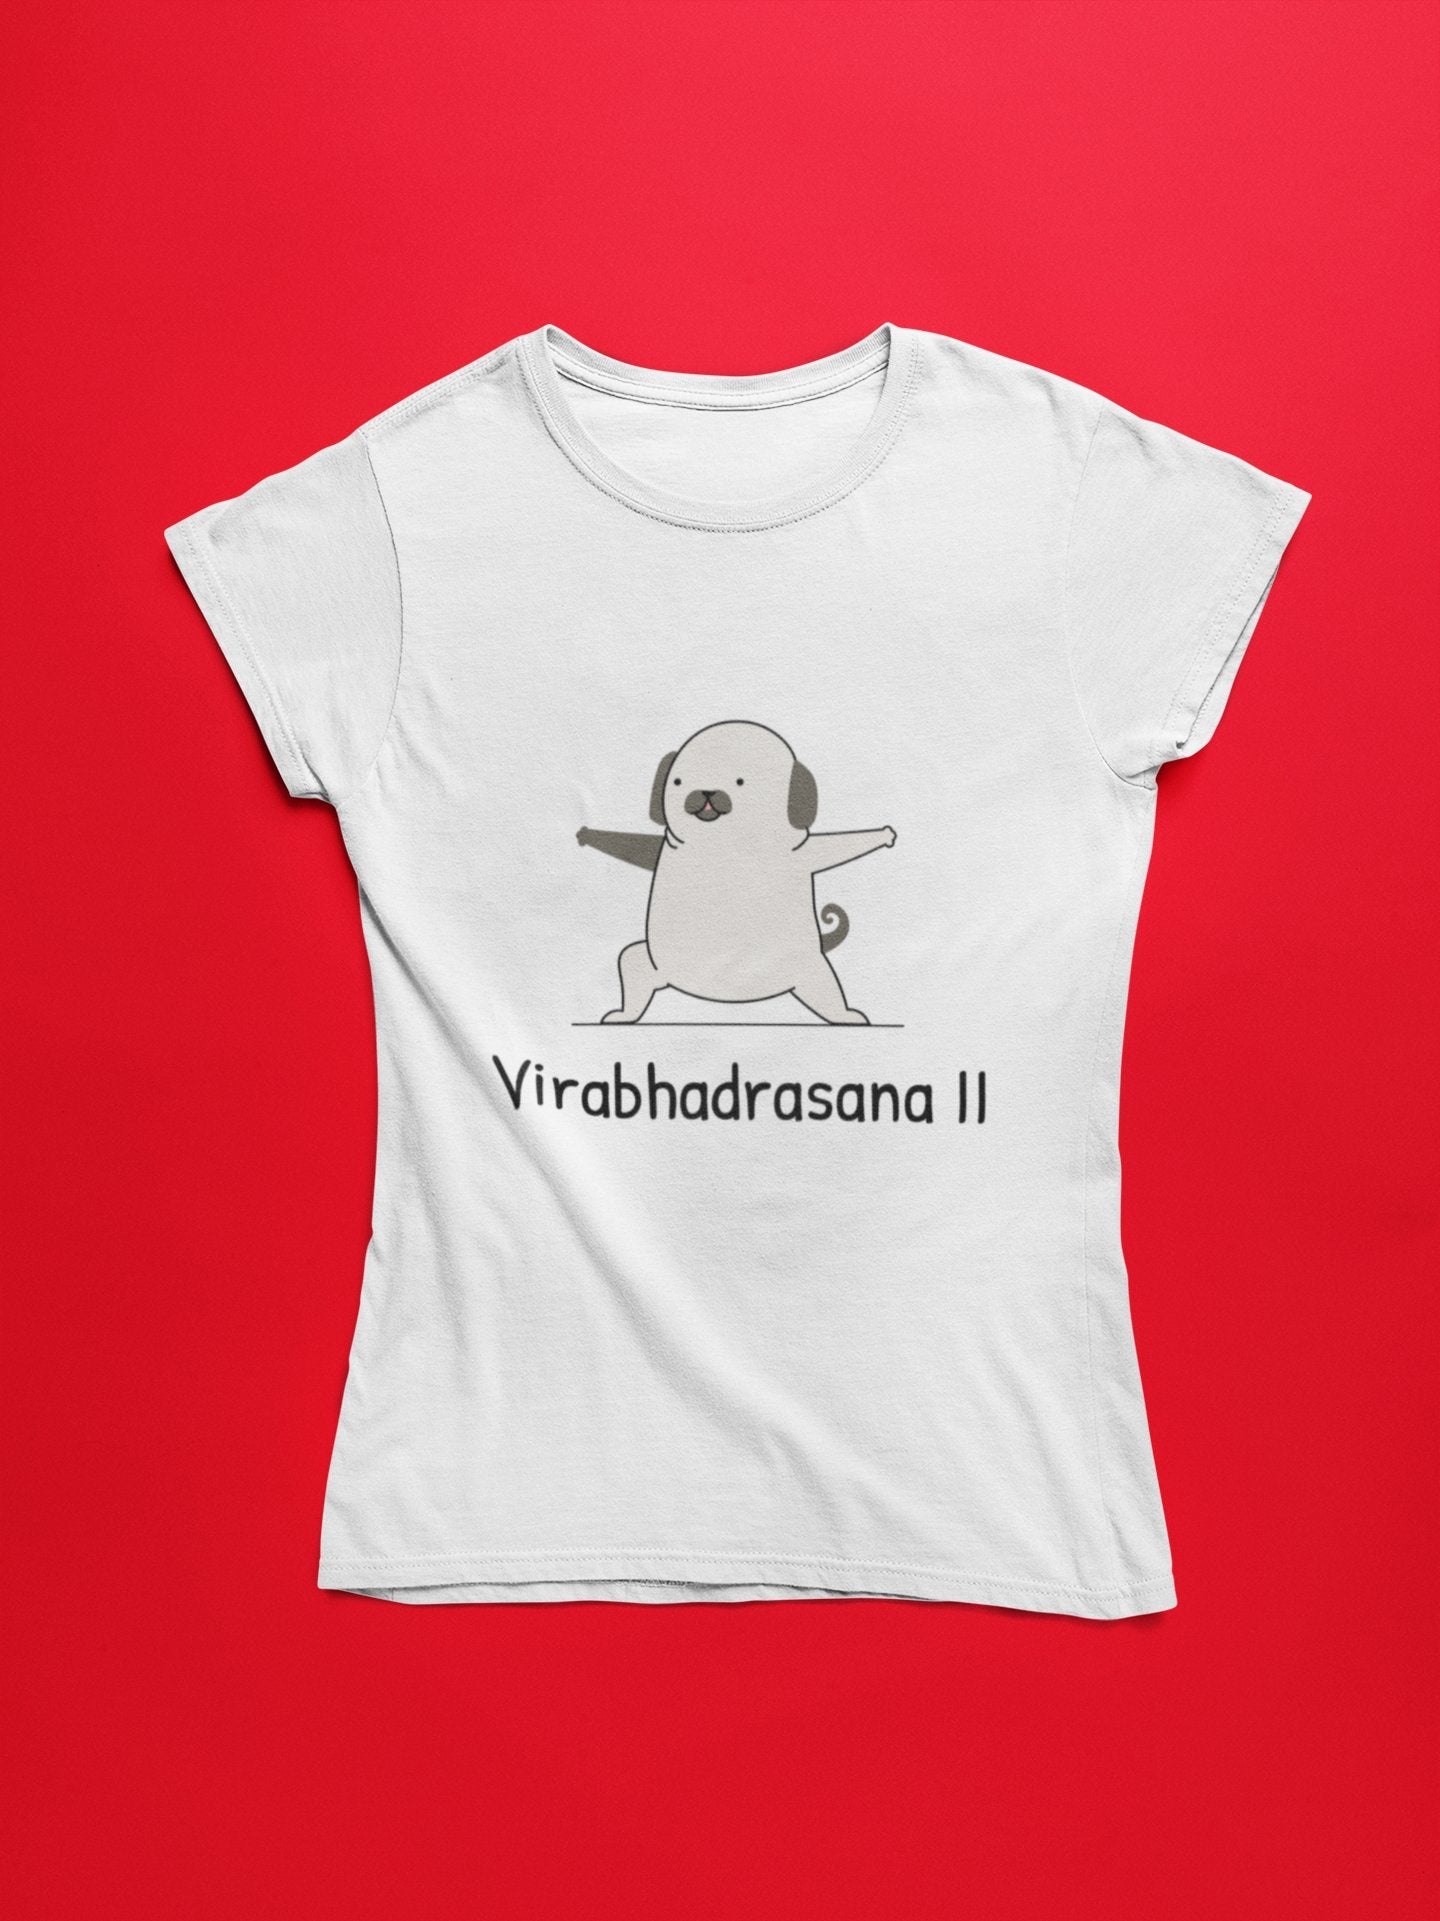 thelegalgang,Virabhadrasana Design Yoga T shirt for Women,WOMEN.